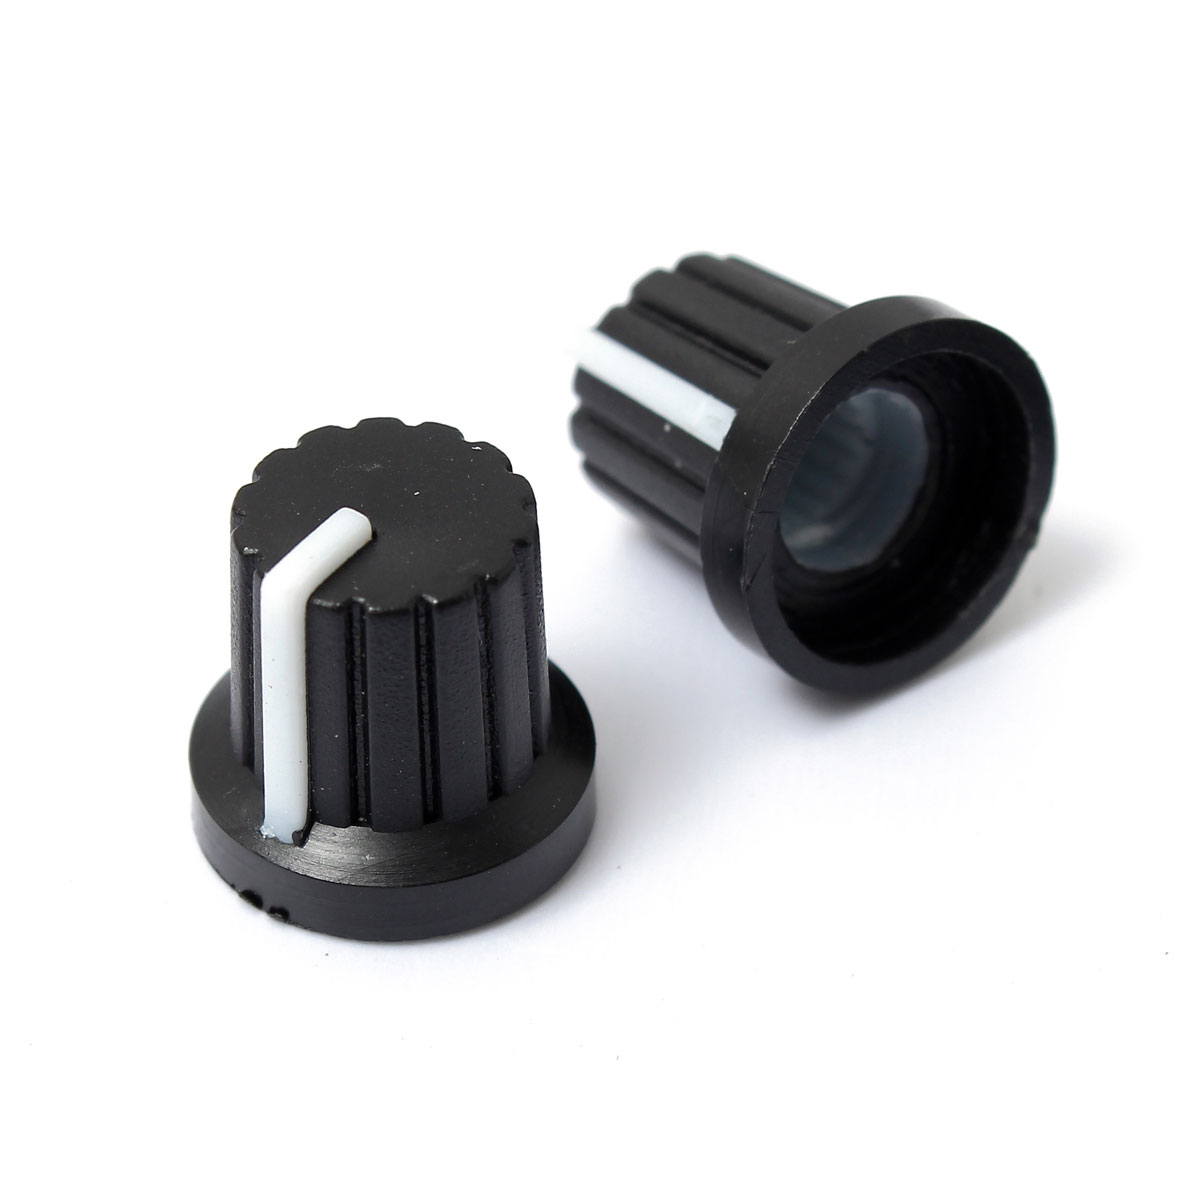 10pcs-6mm-Shaft-Hole-Dia-Plastic-Threaded-knurled-Potentiometer-Knobs-Caps-983613-3